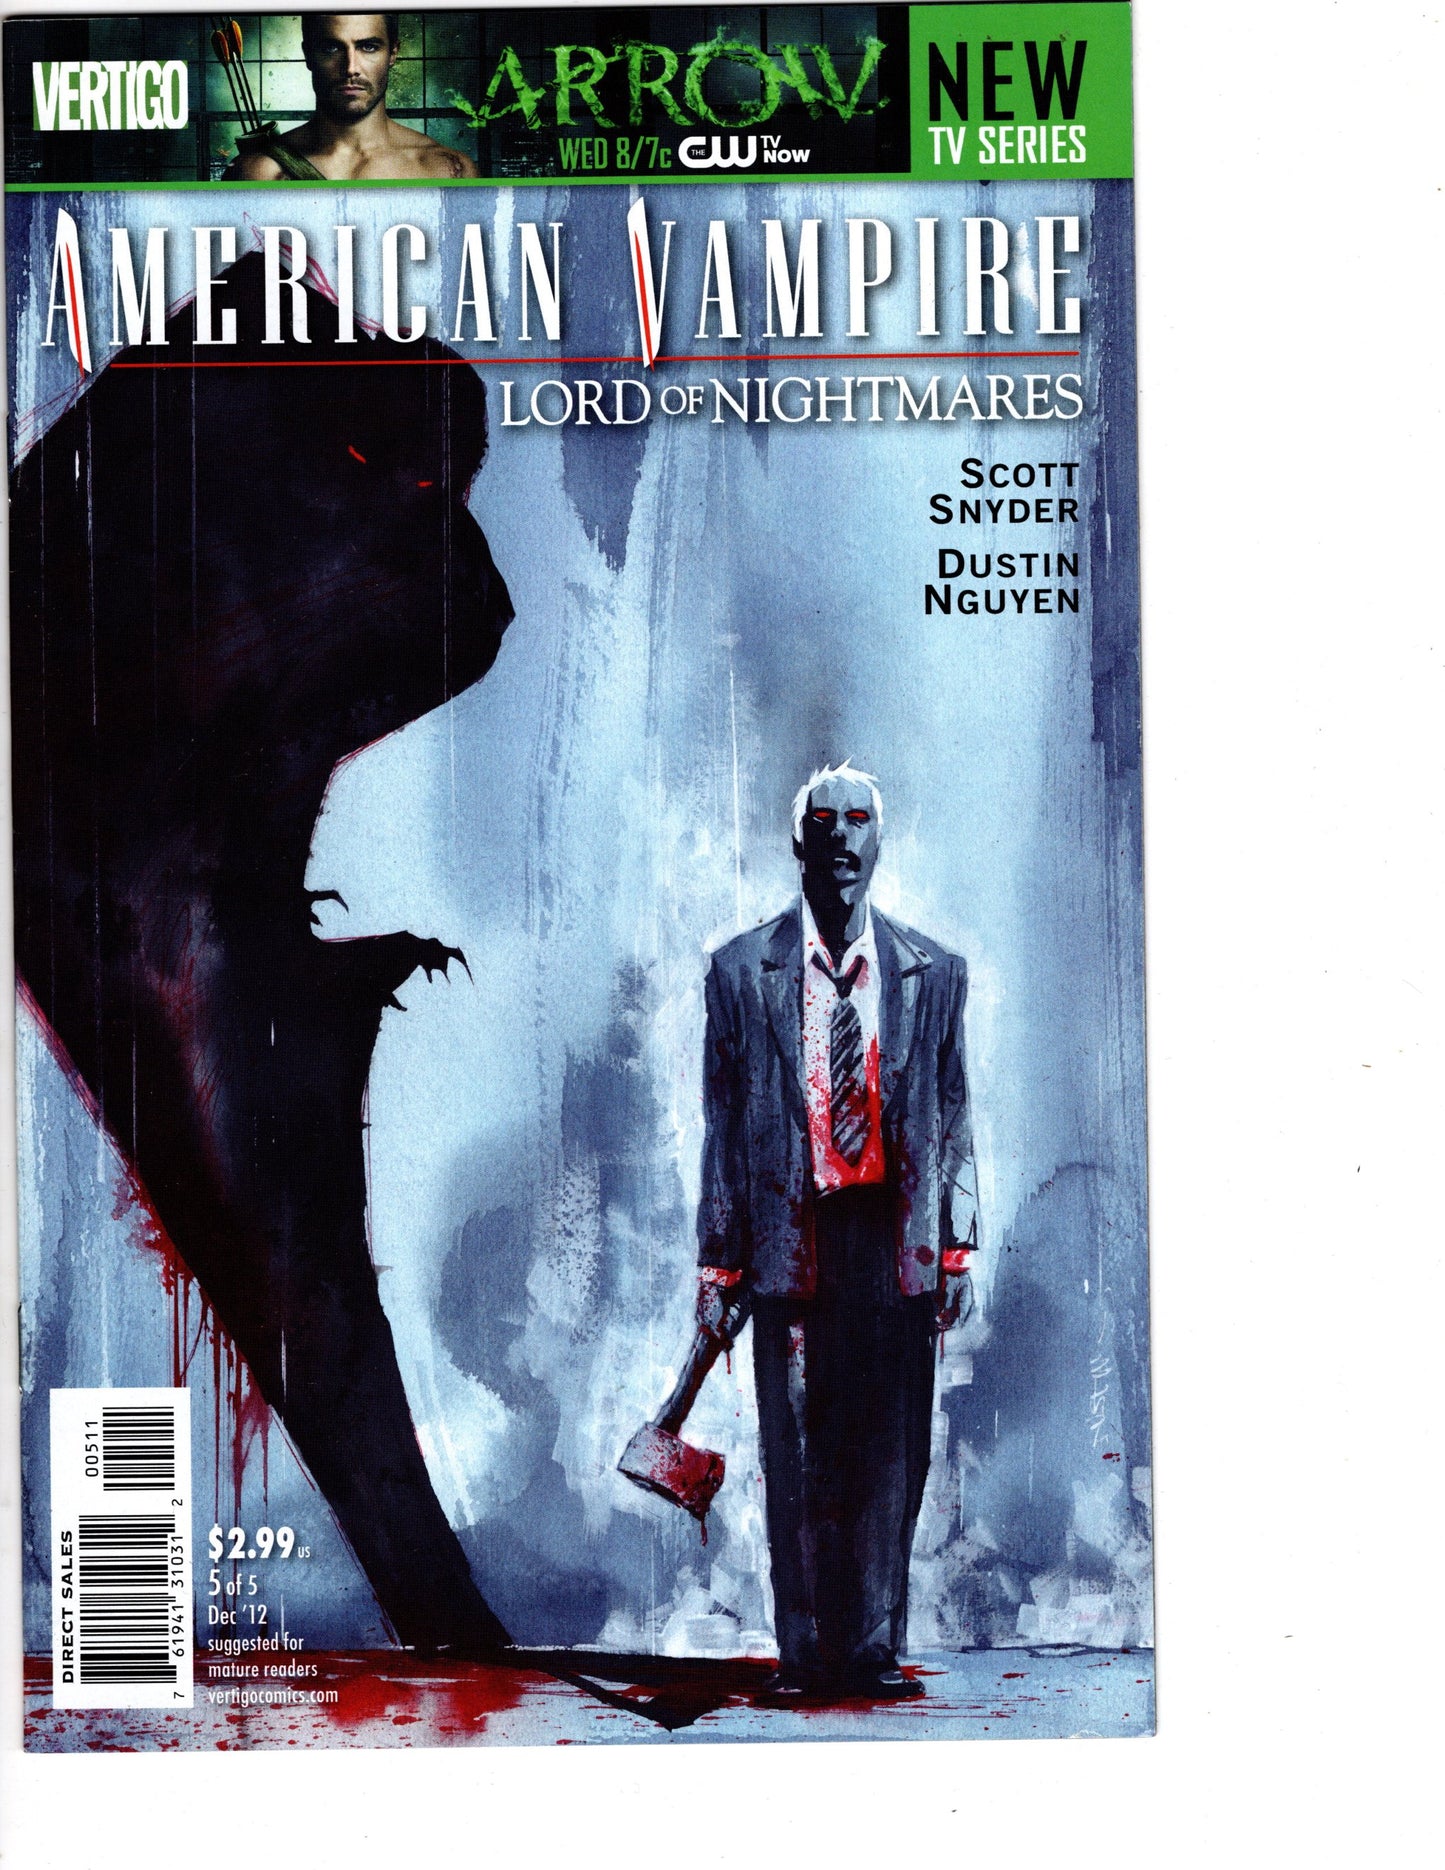 American Vampire #5